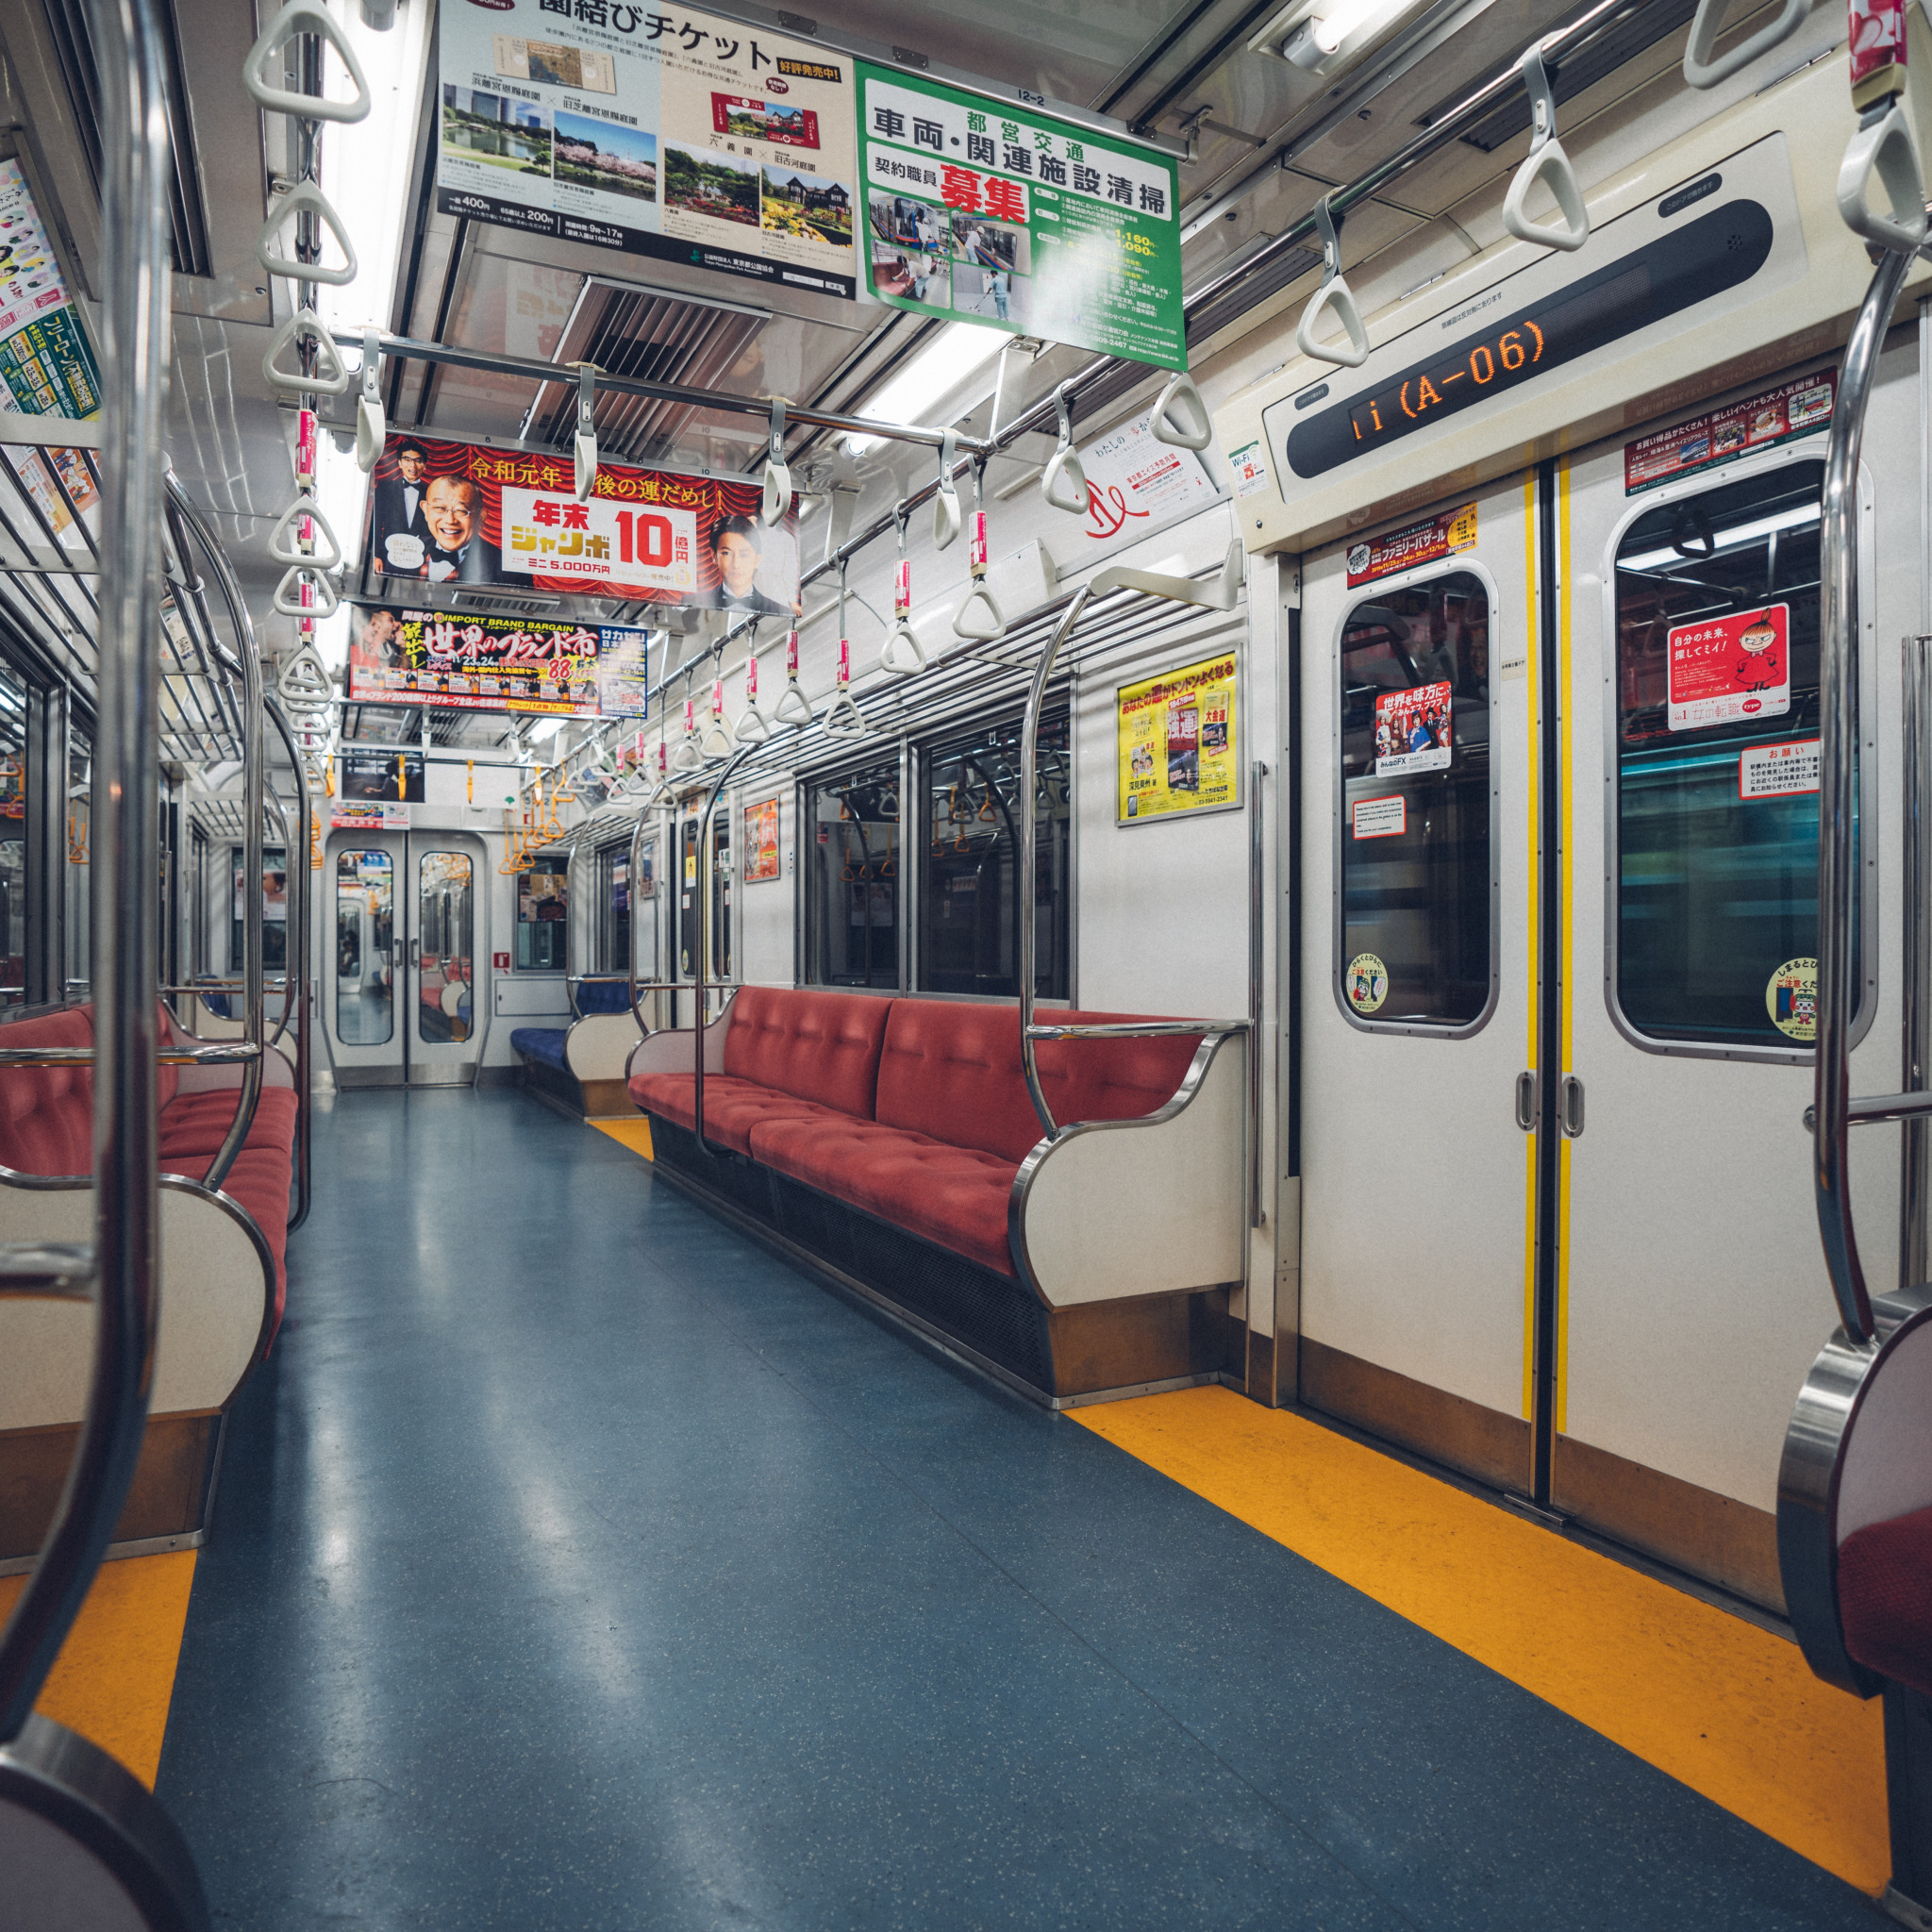 Вагон метро Токио. Поезд метро Токио. Станции метро Токио. Метрополитен Токио вагоны.